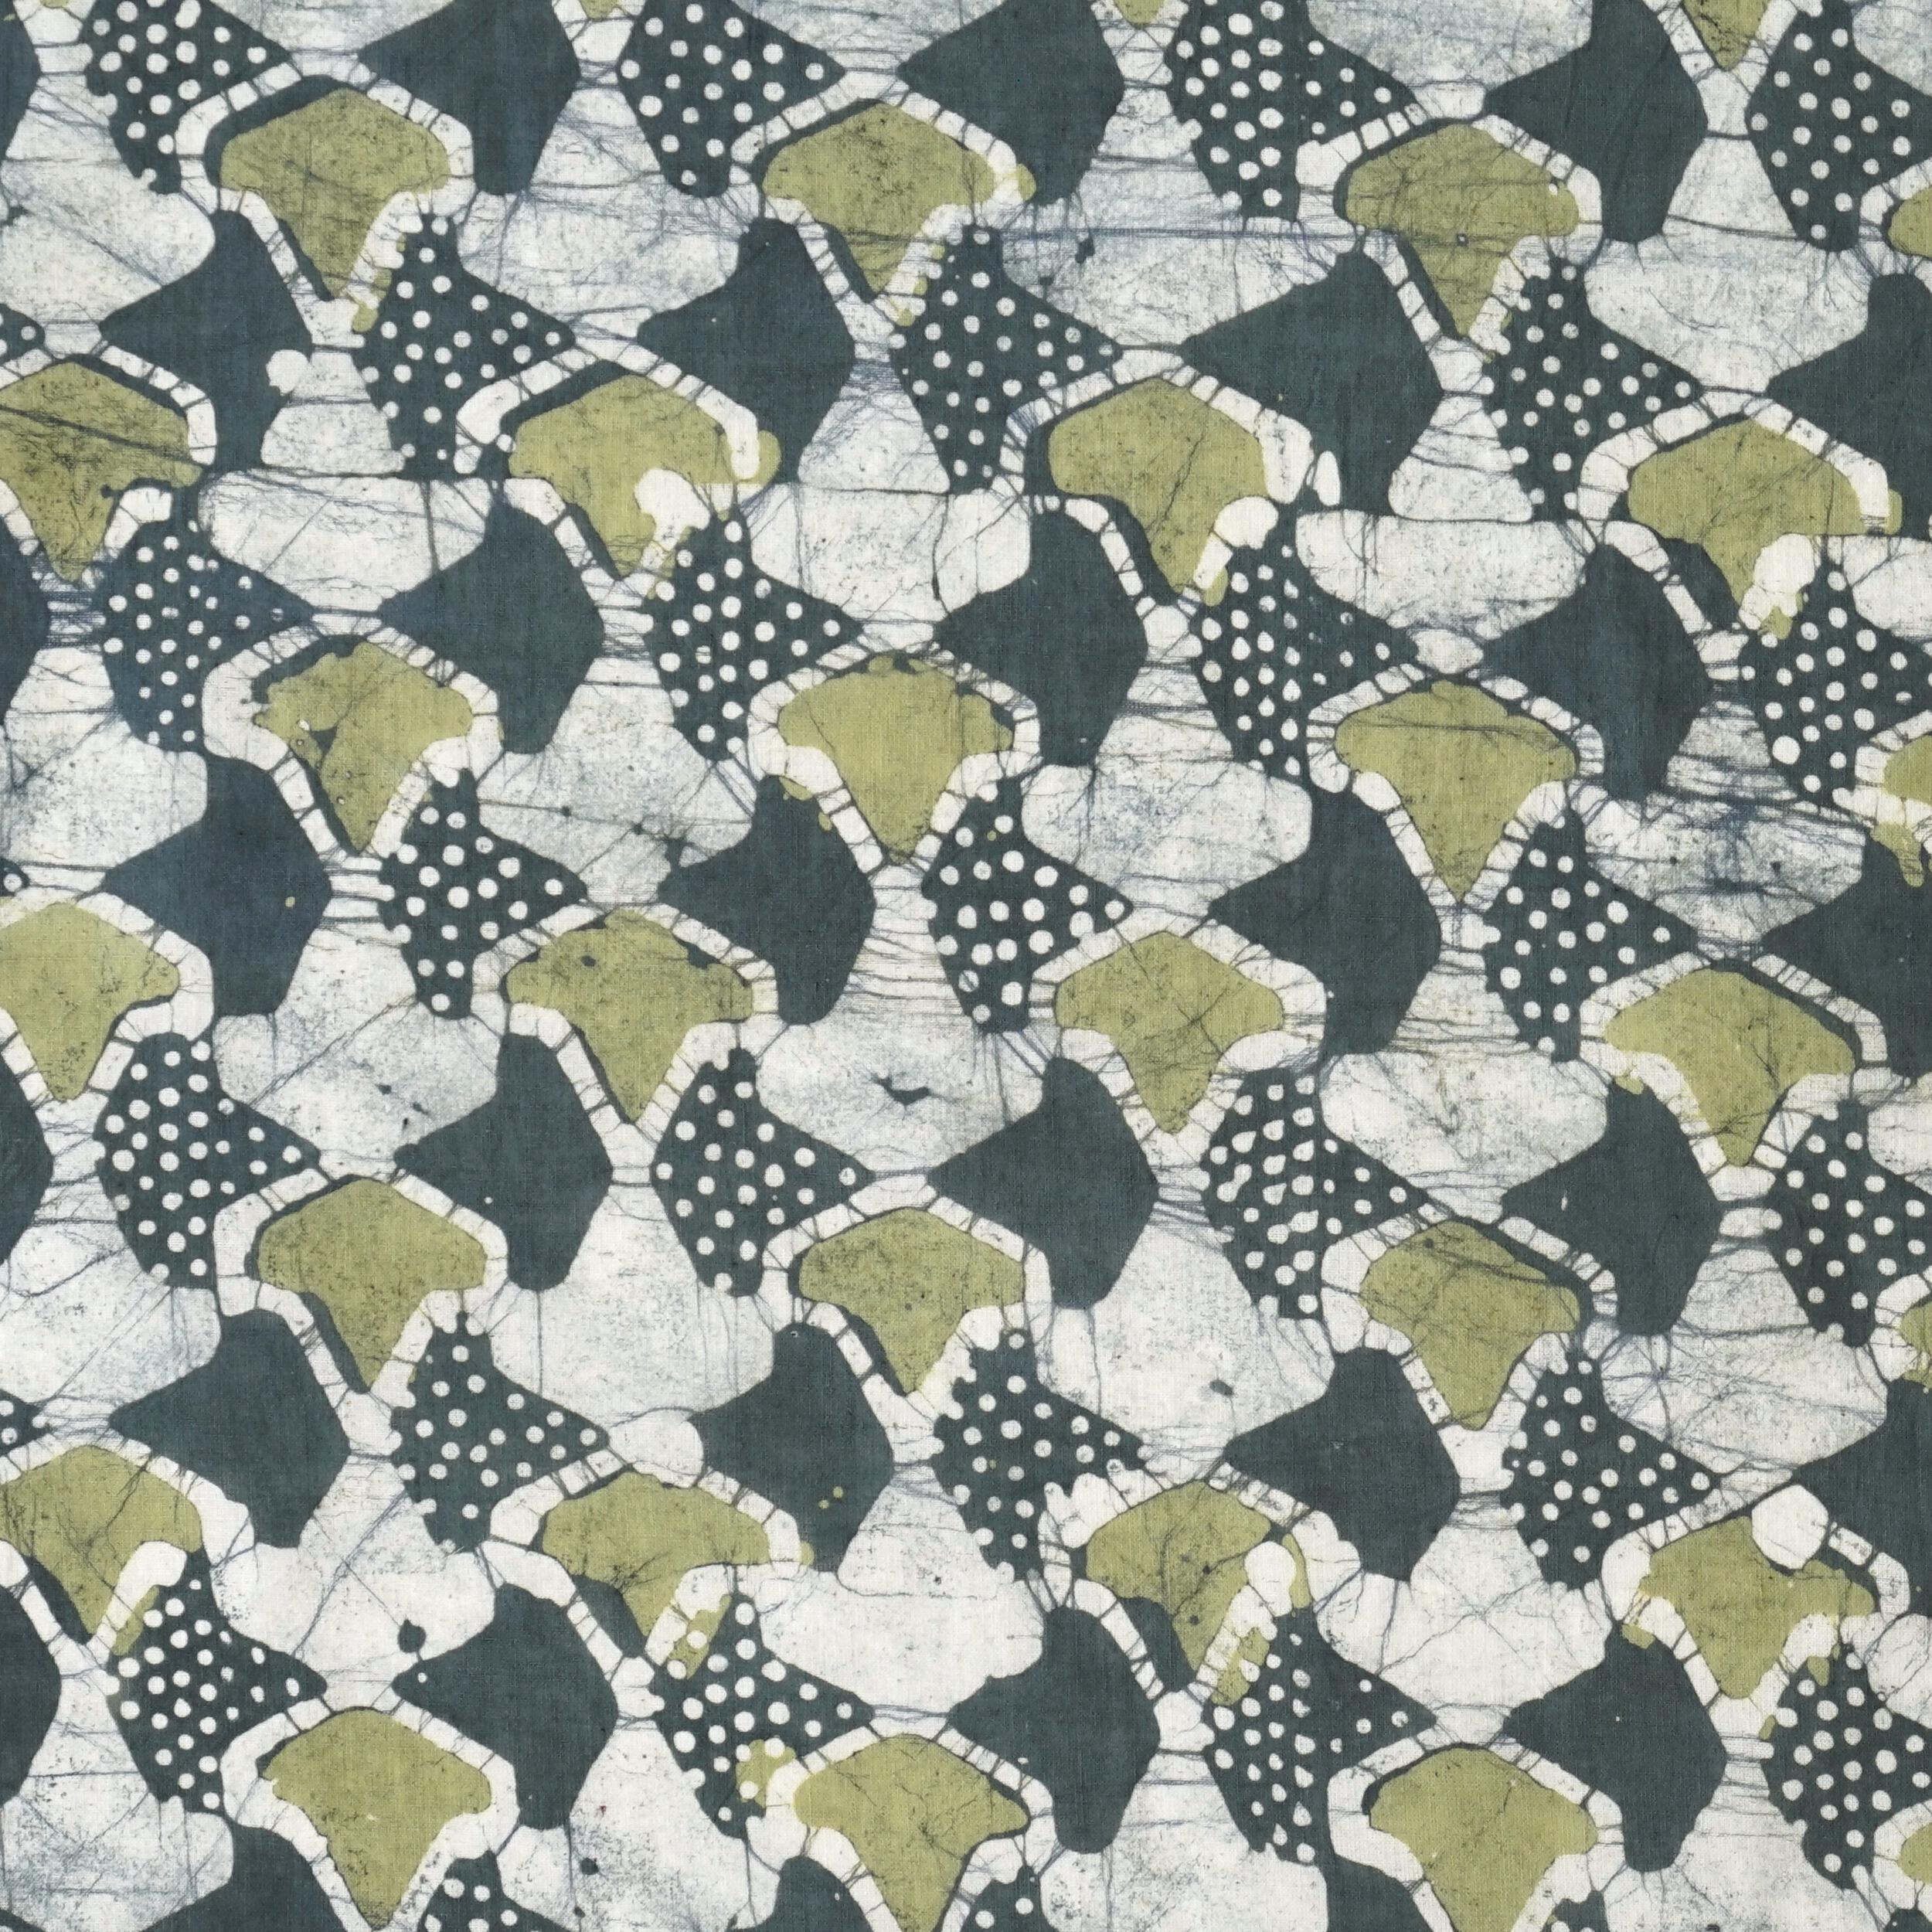 100% Block-Printed Batik Cotton Fabric From India - Sea Sponge Motif - Flat